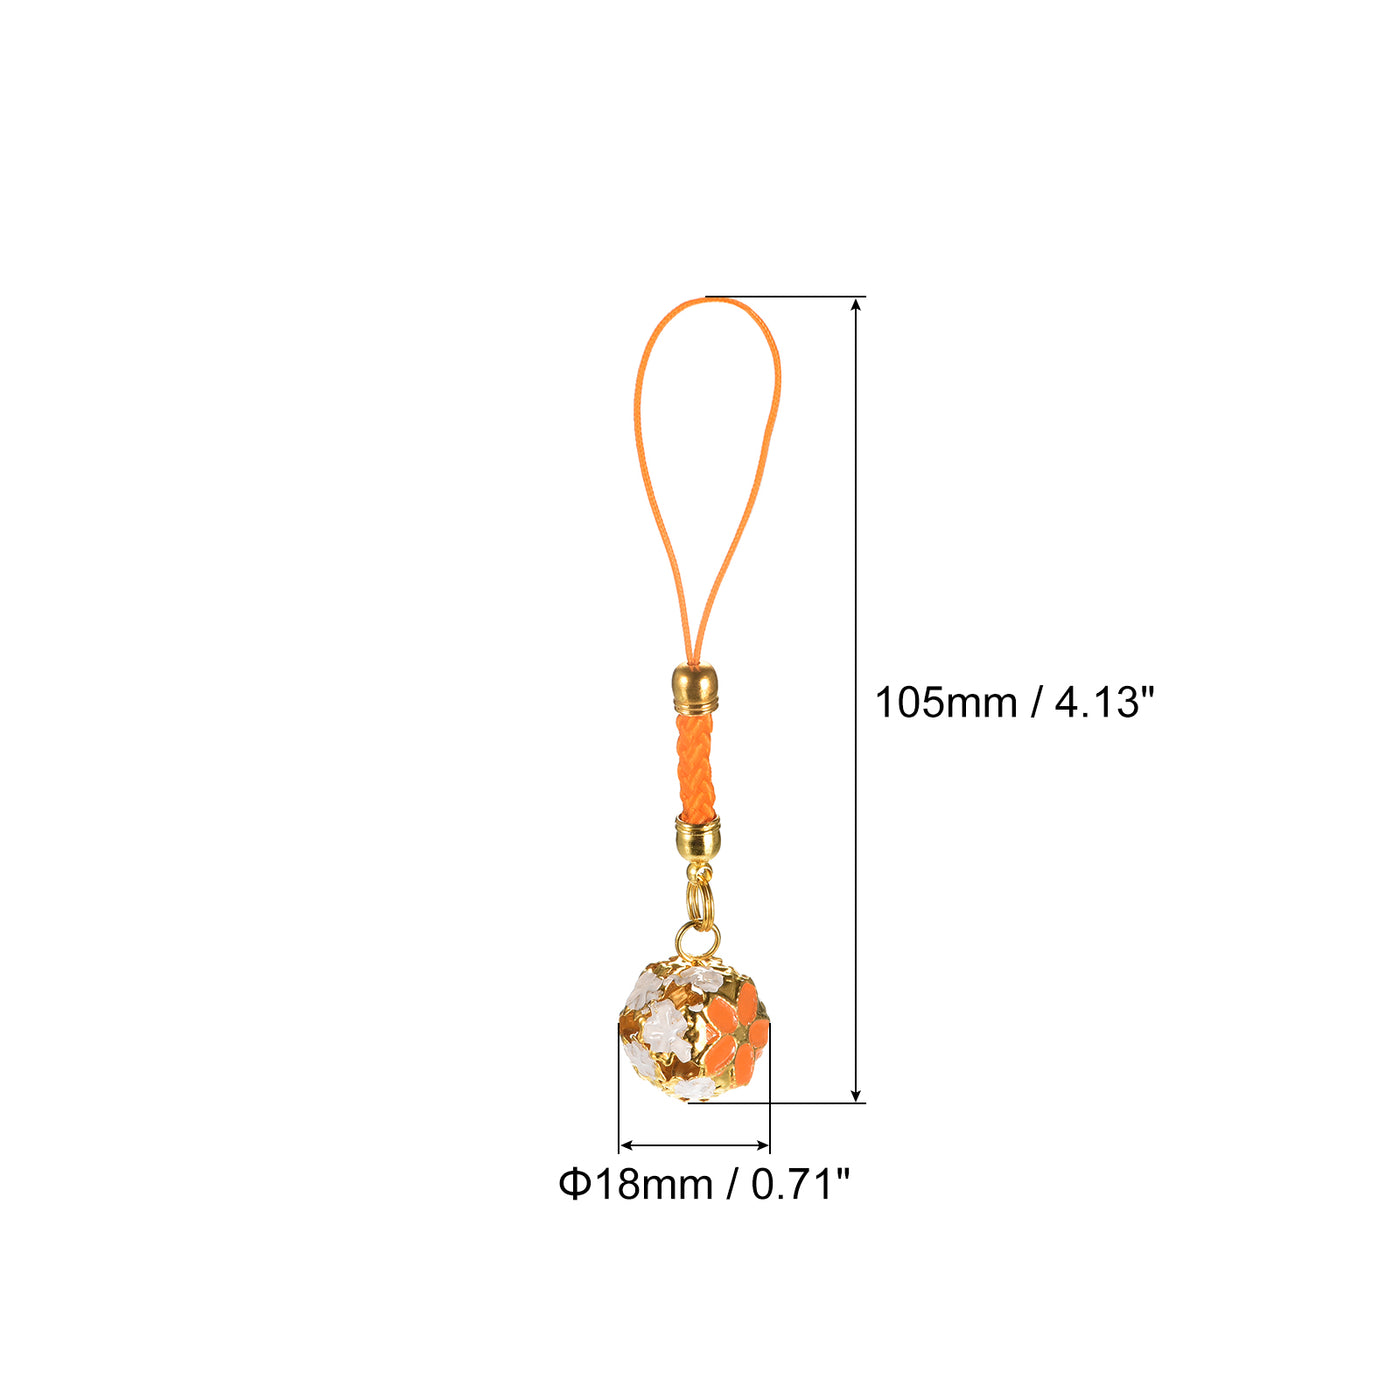 uxcell Uxcell 5Pcs Cellphone Strap Pendant, 10.5cm/0.71" Length Orange for DIY Crafts